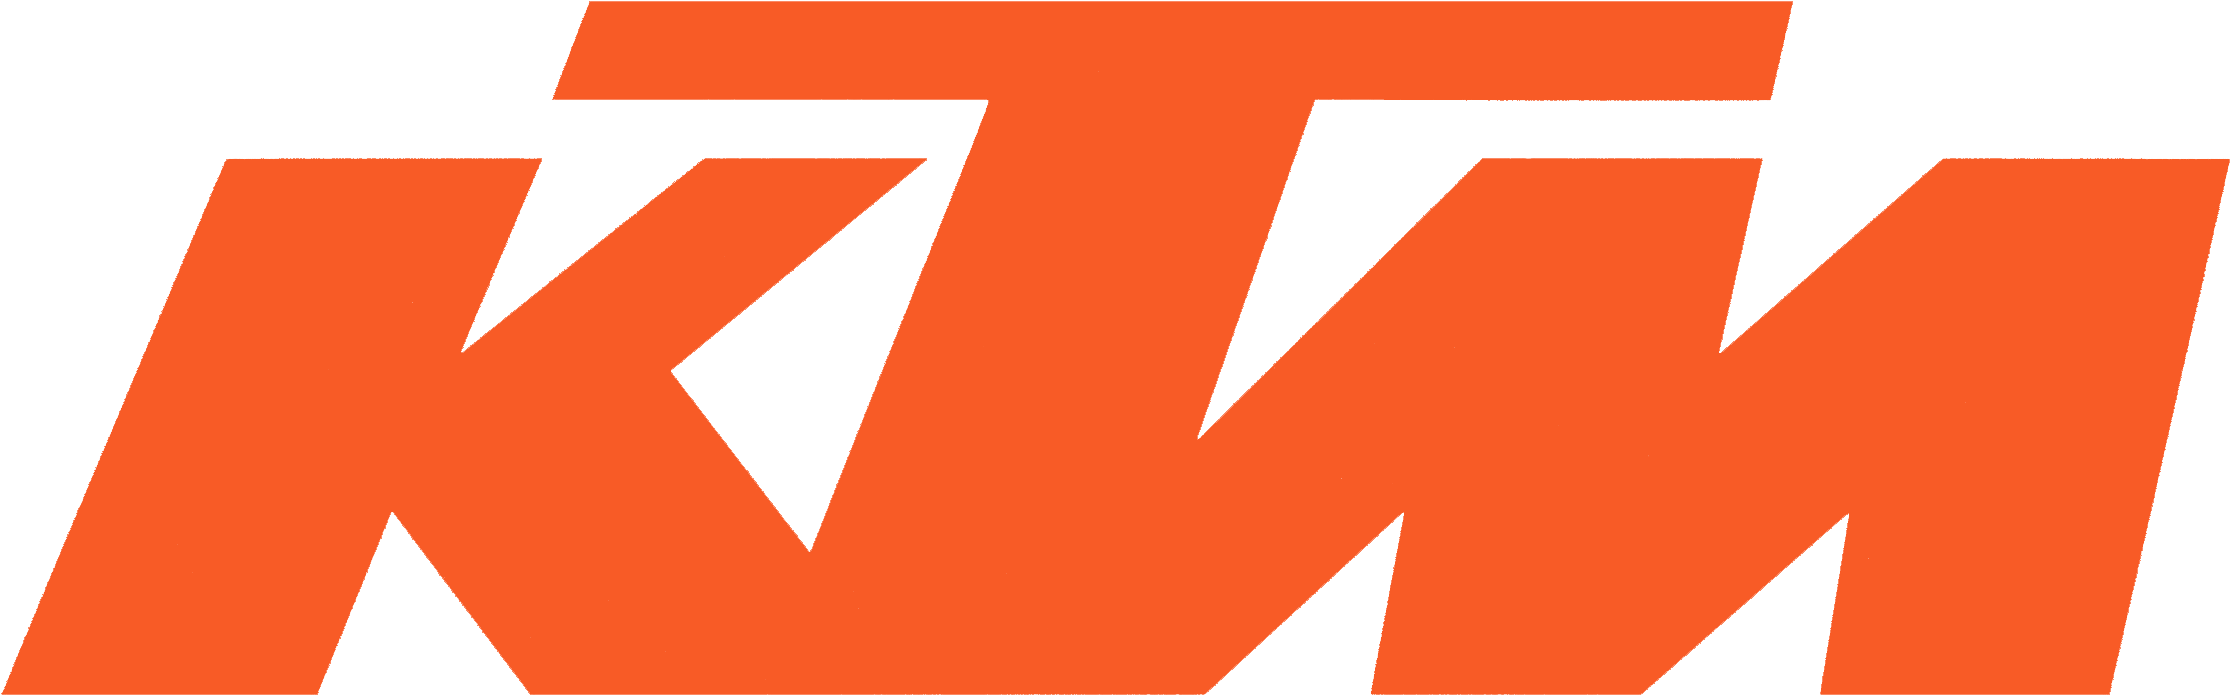 Download Kawasaki Ktm Logo Hd Png Image With No Background Pngkey Com